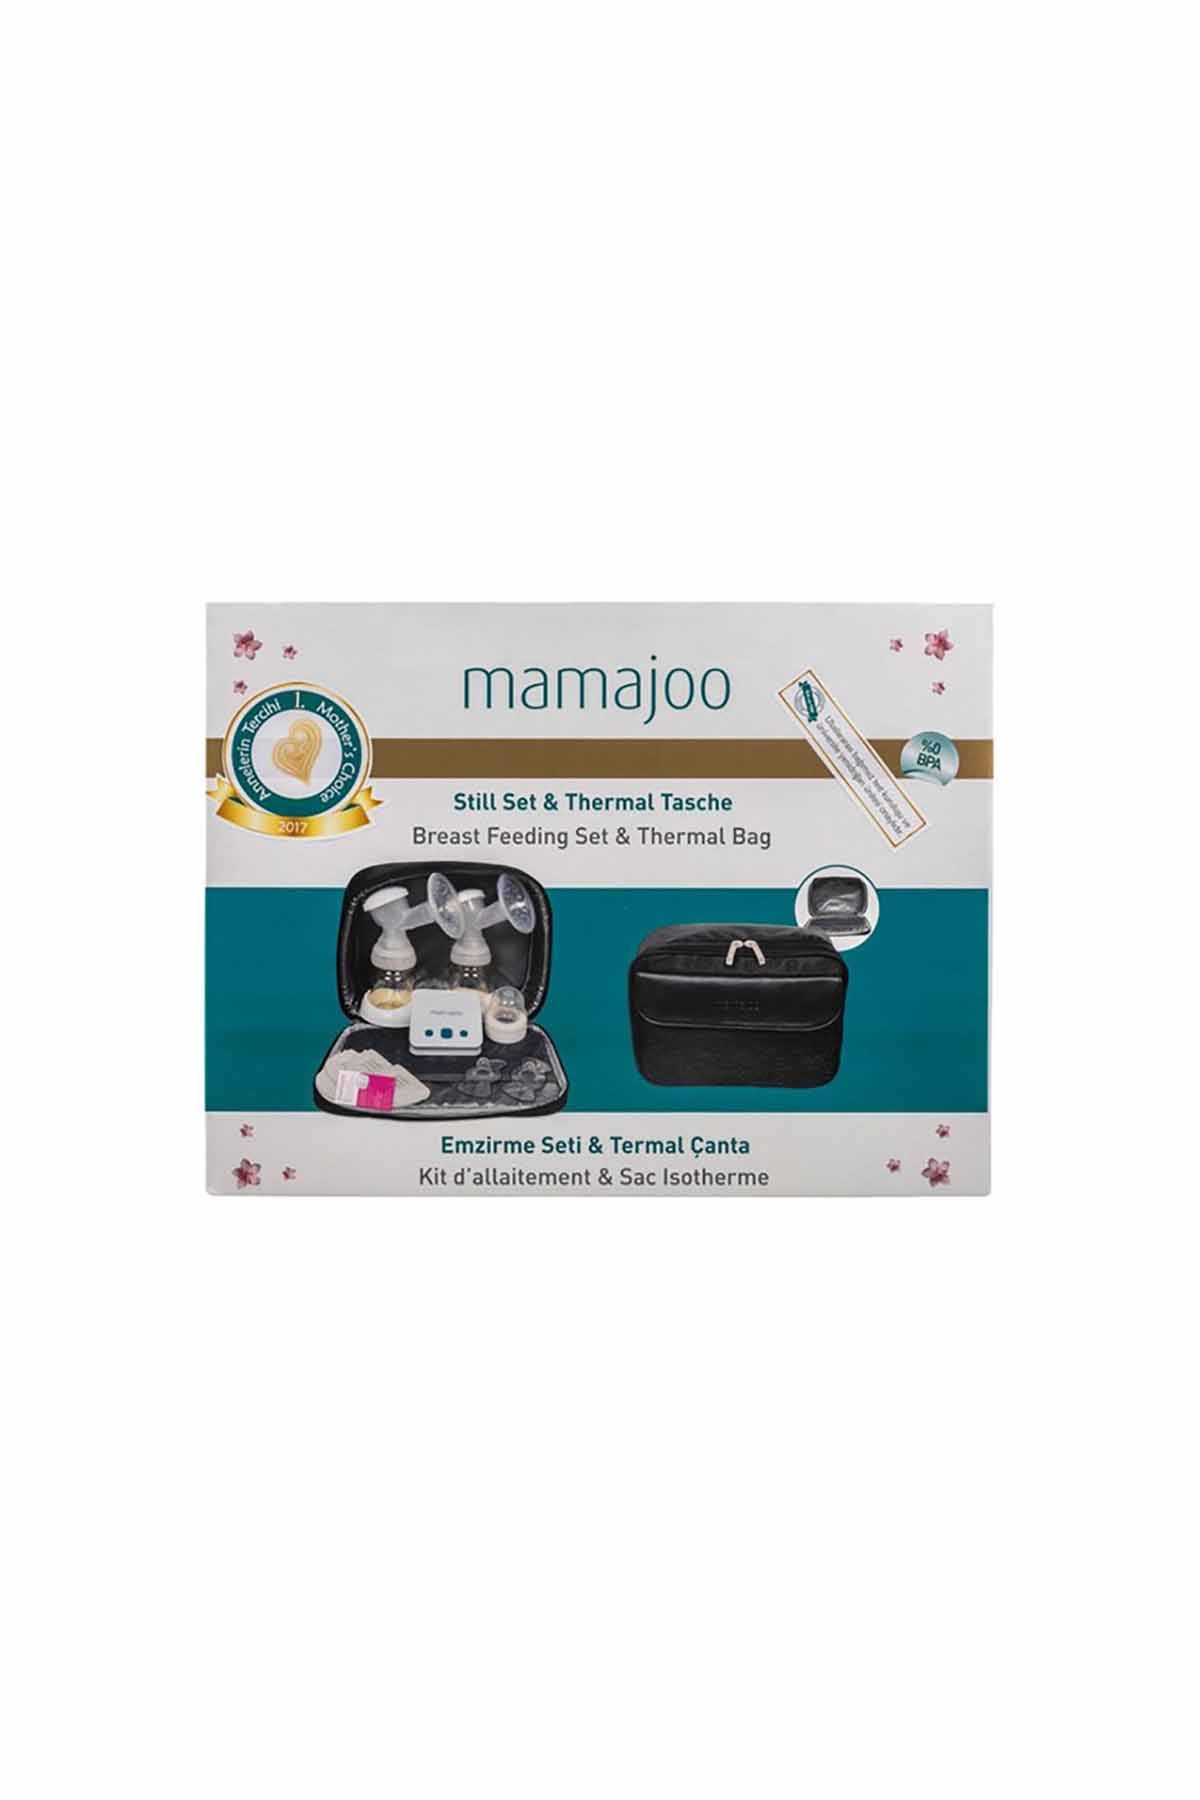 Mamajoo Elektronik USB Çiftli Göğüs Pompası & Emzirme Seti